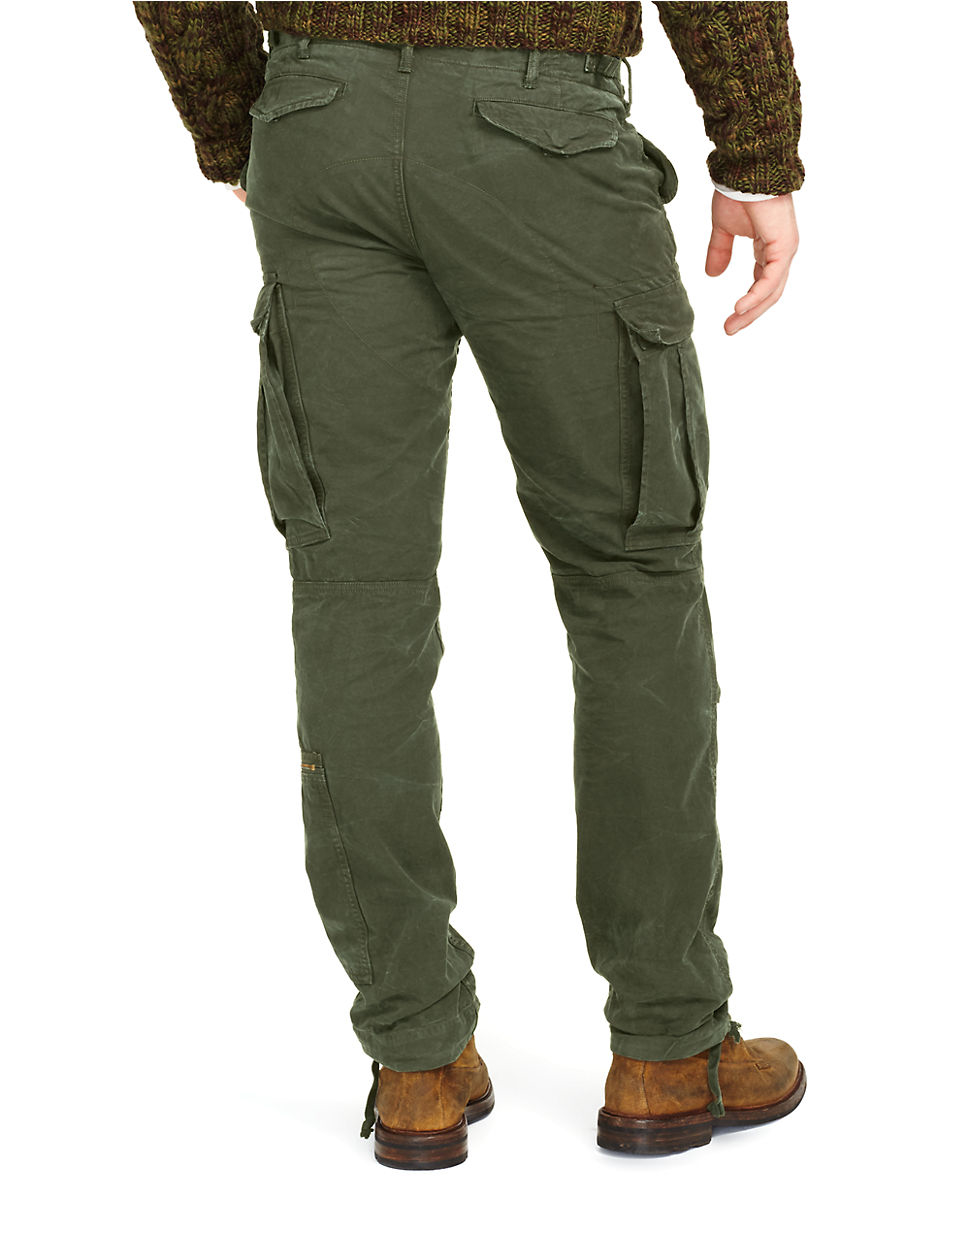 Polo Ralph Lauren Military Cargo Pants in Green for Men - Lyst